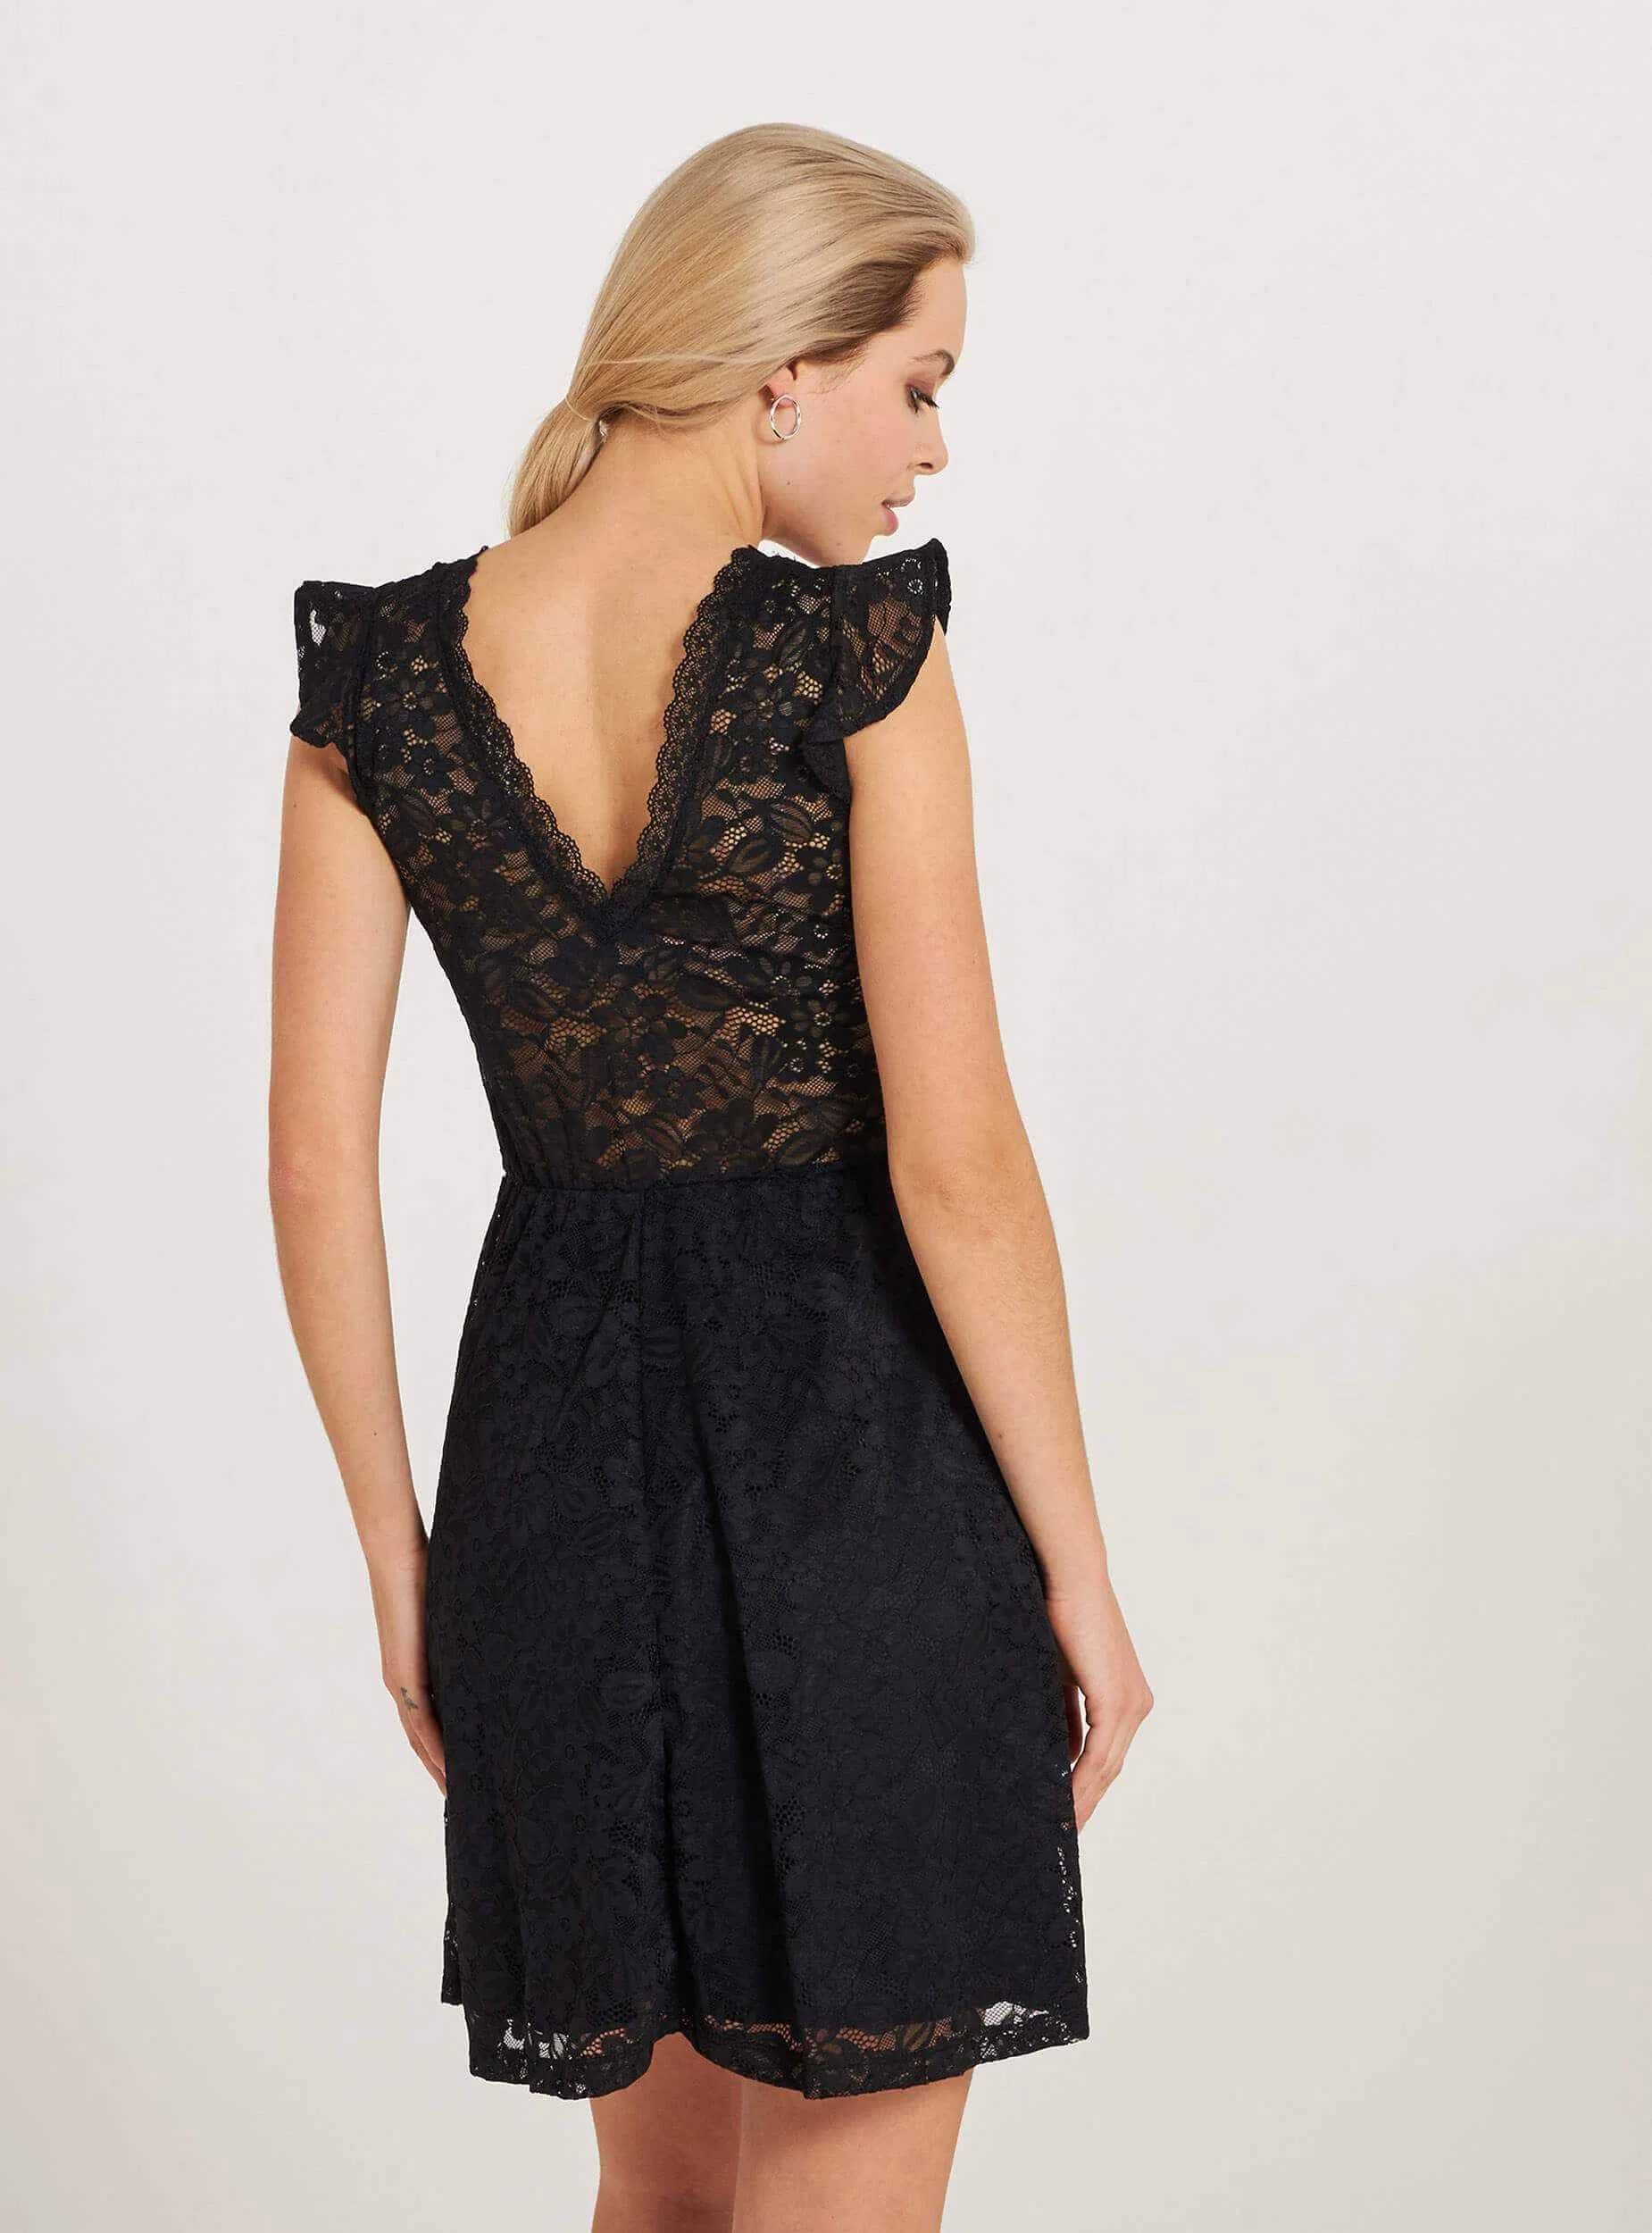 Sukienka koronkowa czarna midi Terranova 42/XL